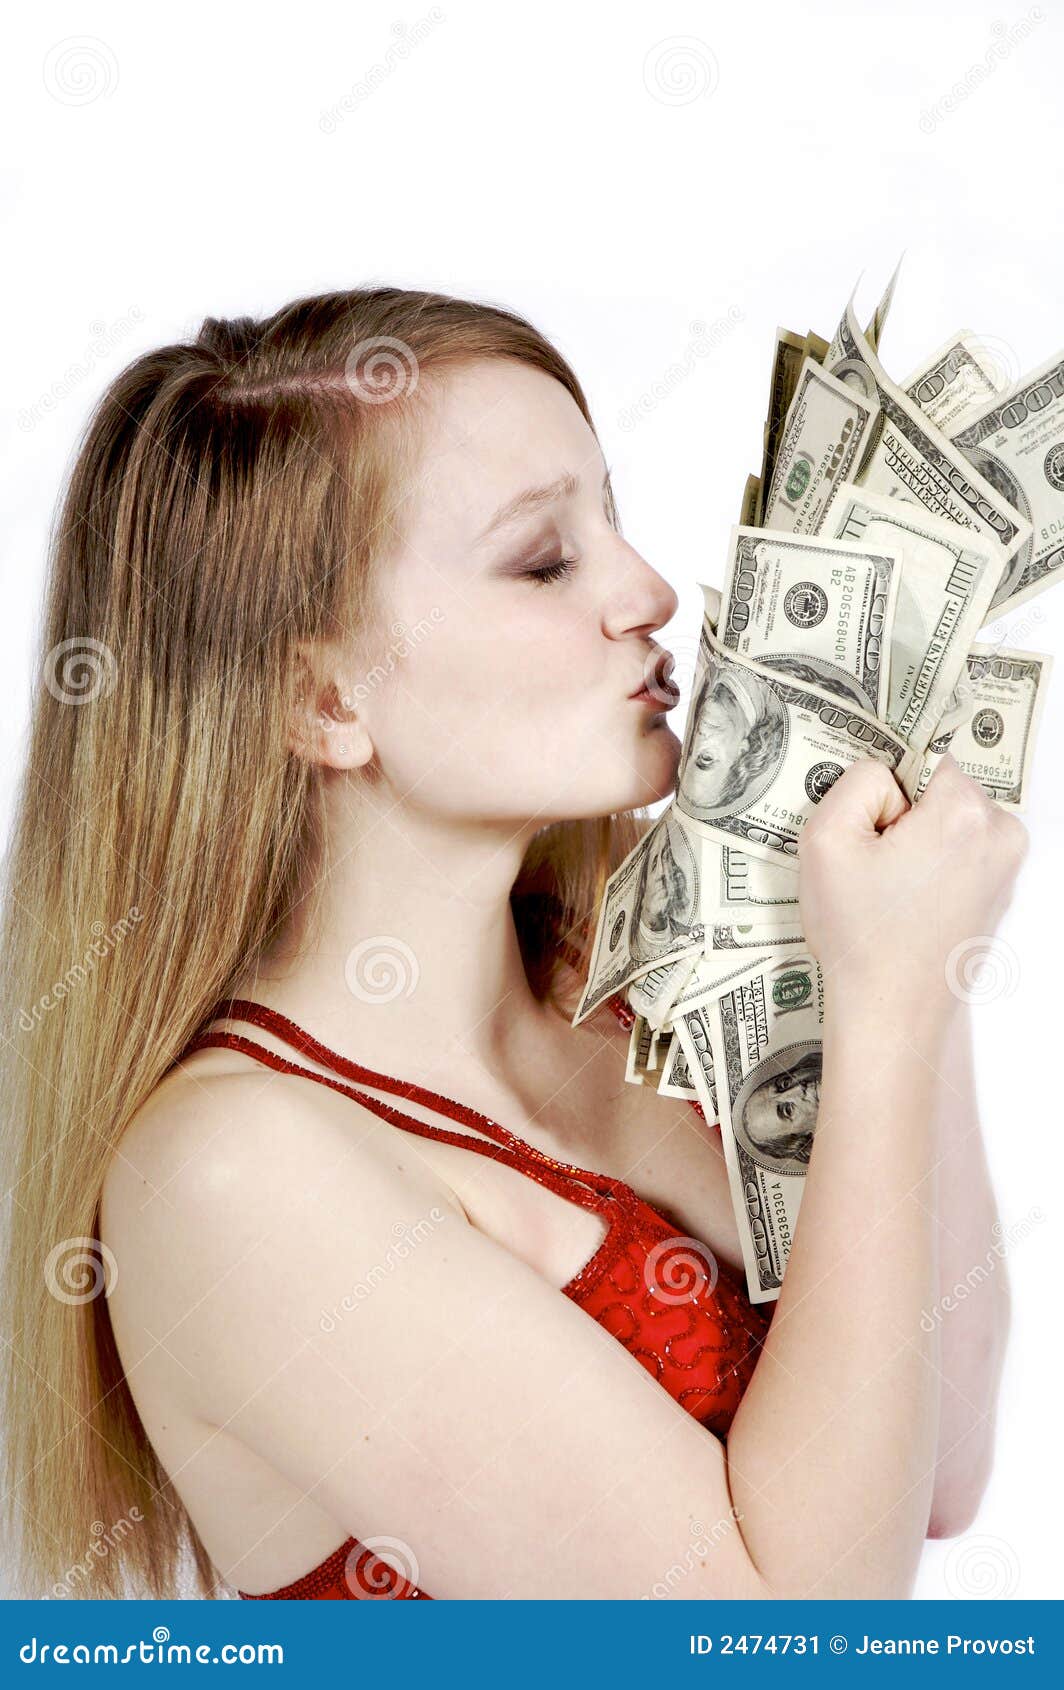 Kiss Or Cash